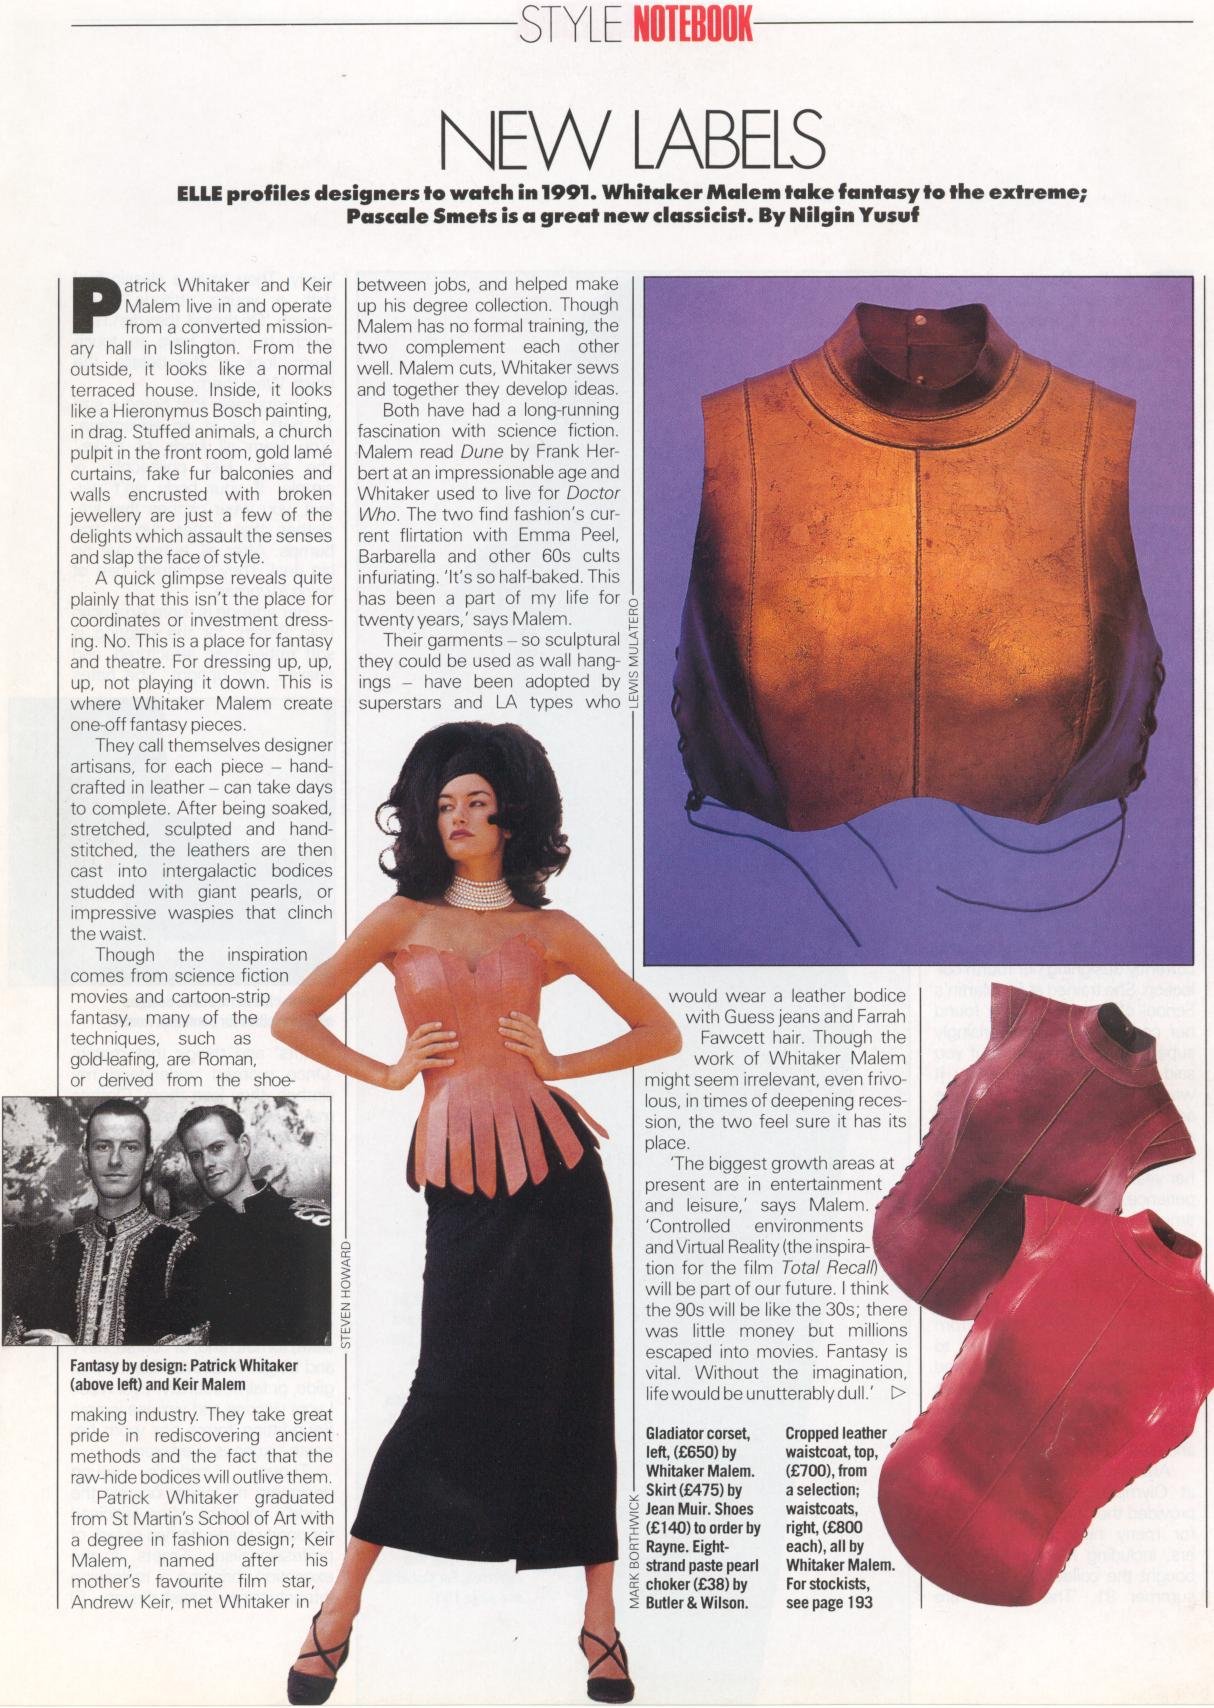 whitaker-malem-fashion-elle-magazine-new-labels-interview-article-press-1991.jpg